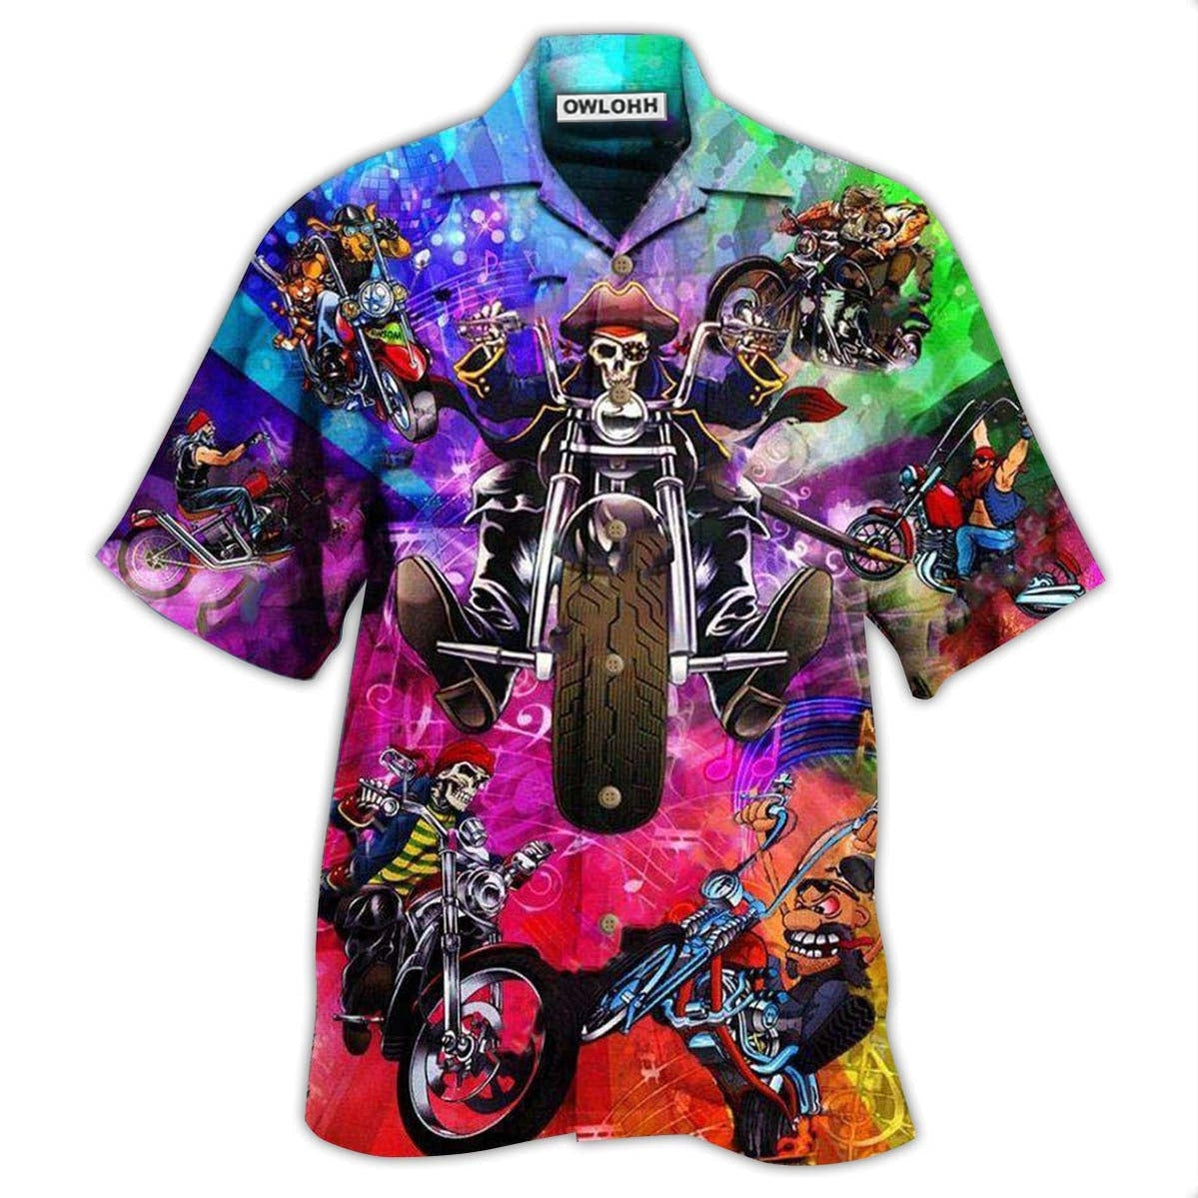 Hawaiian Shirt / Adults / S Motorcycle It's Never Late To Take A Ride - Hawaiian Shirt - Owls Matrix LTD